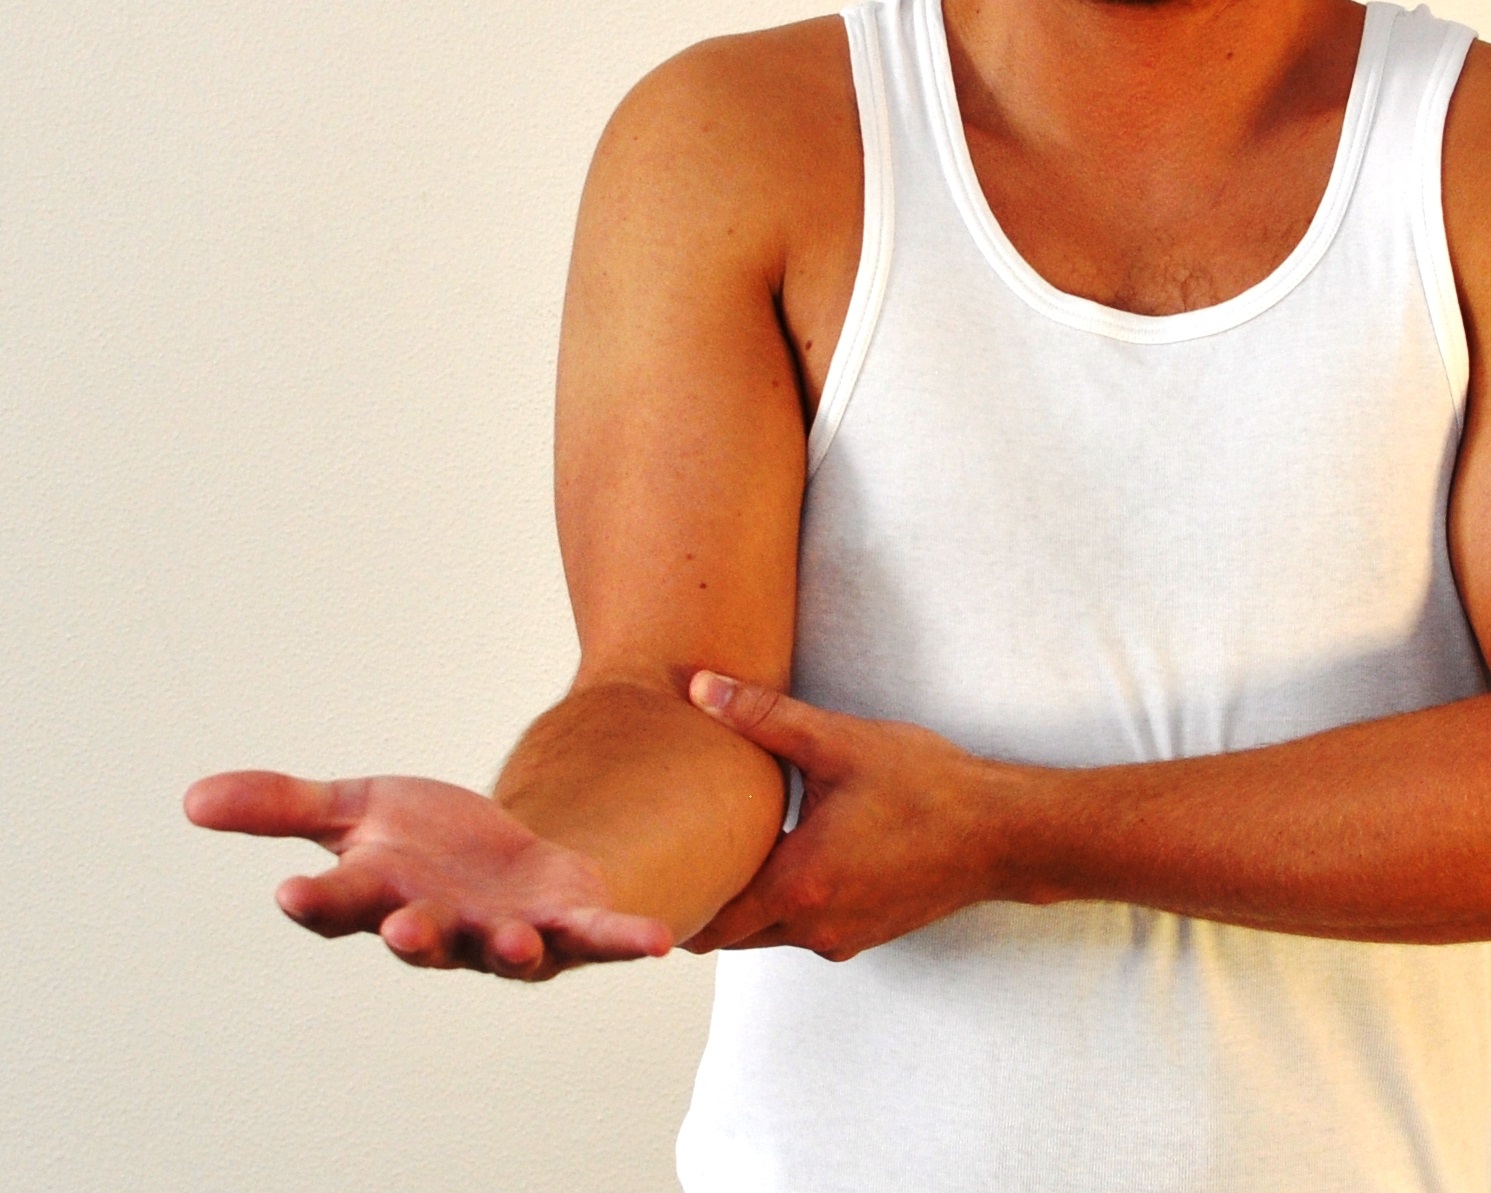 Strakt underarm - håndfladen vender opad - spredte og strakte fingre.